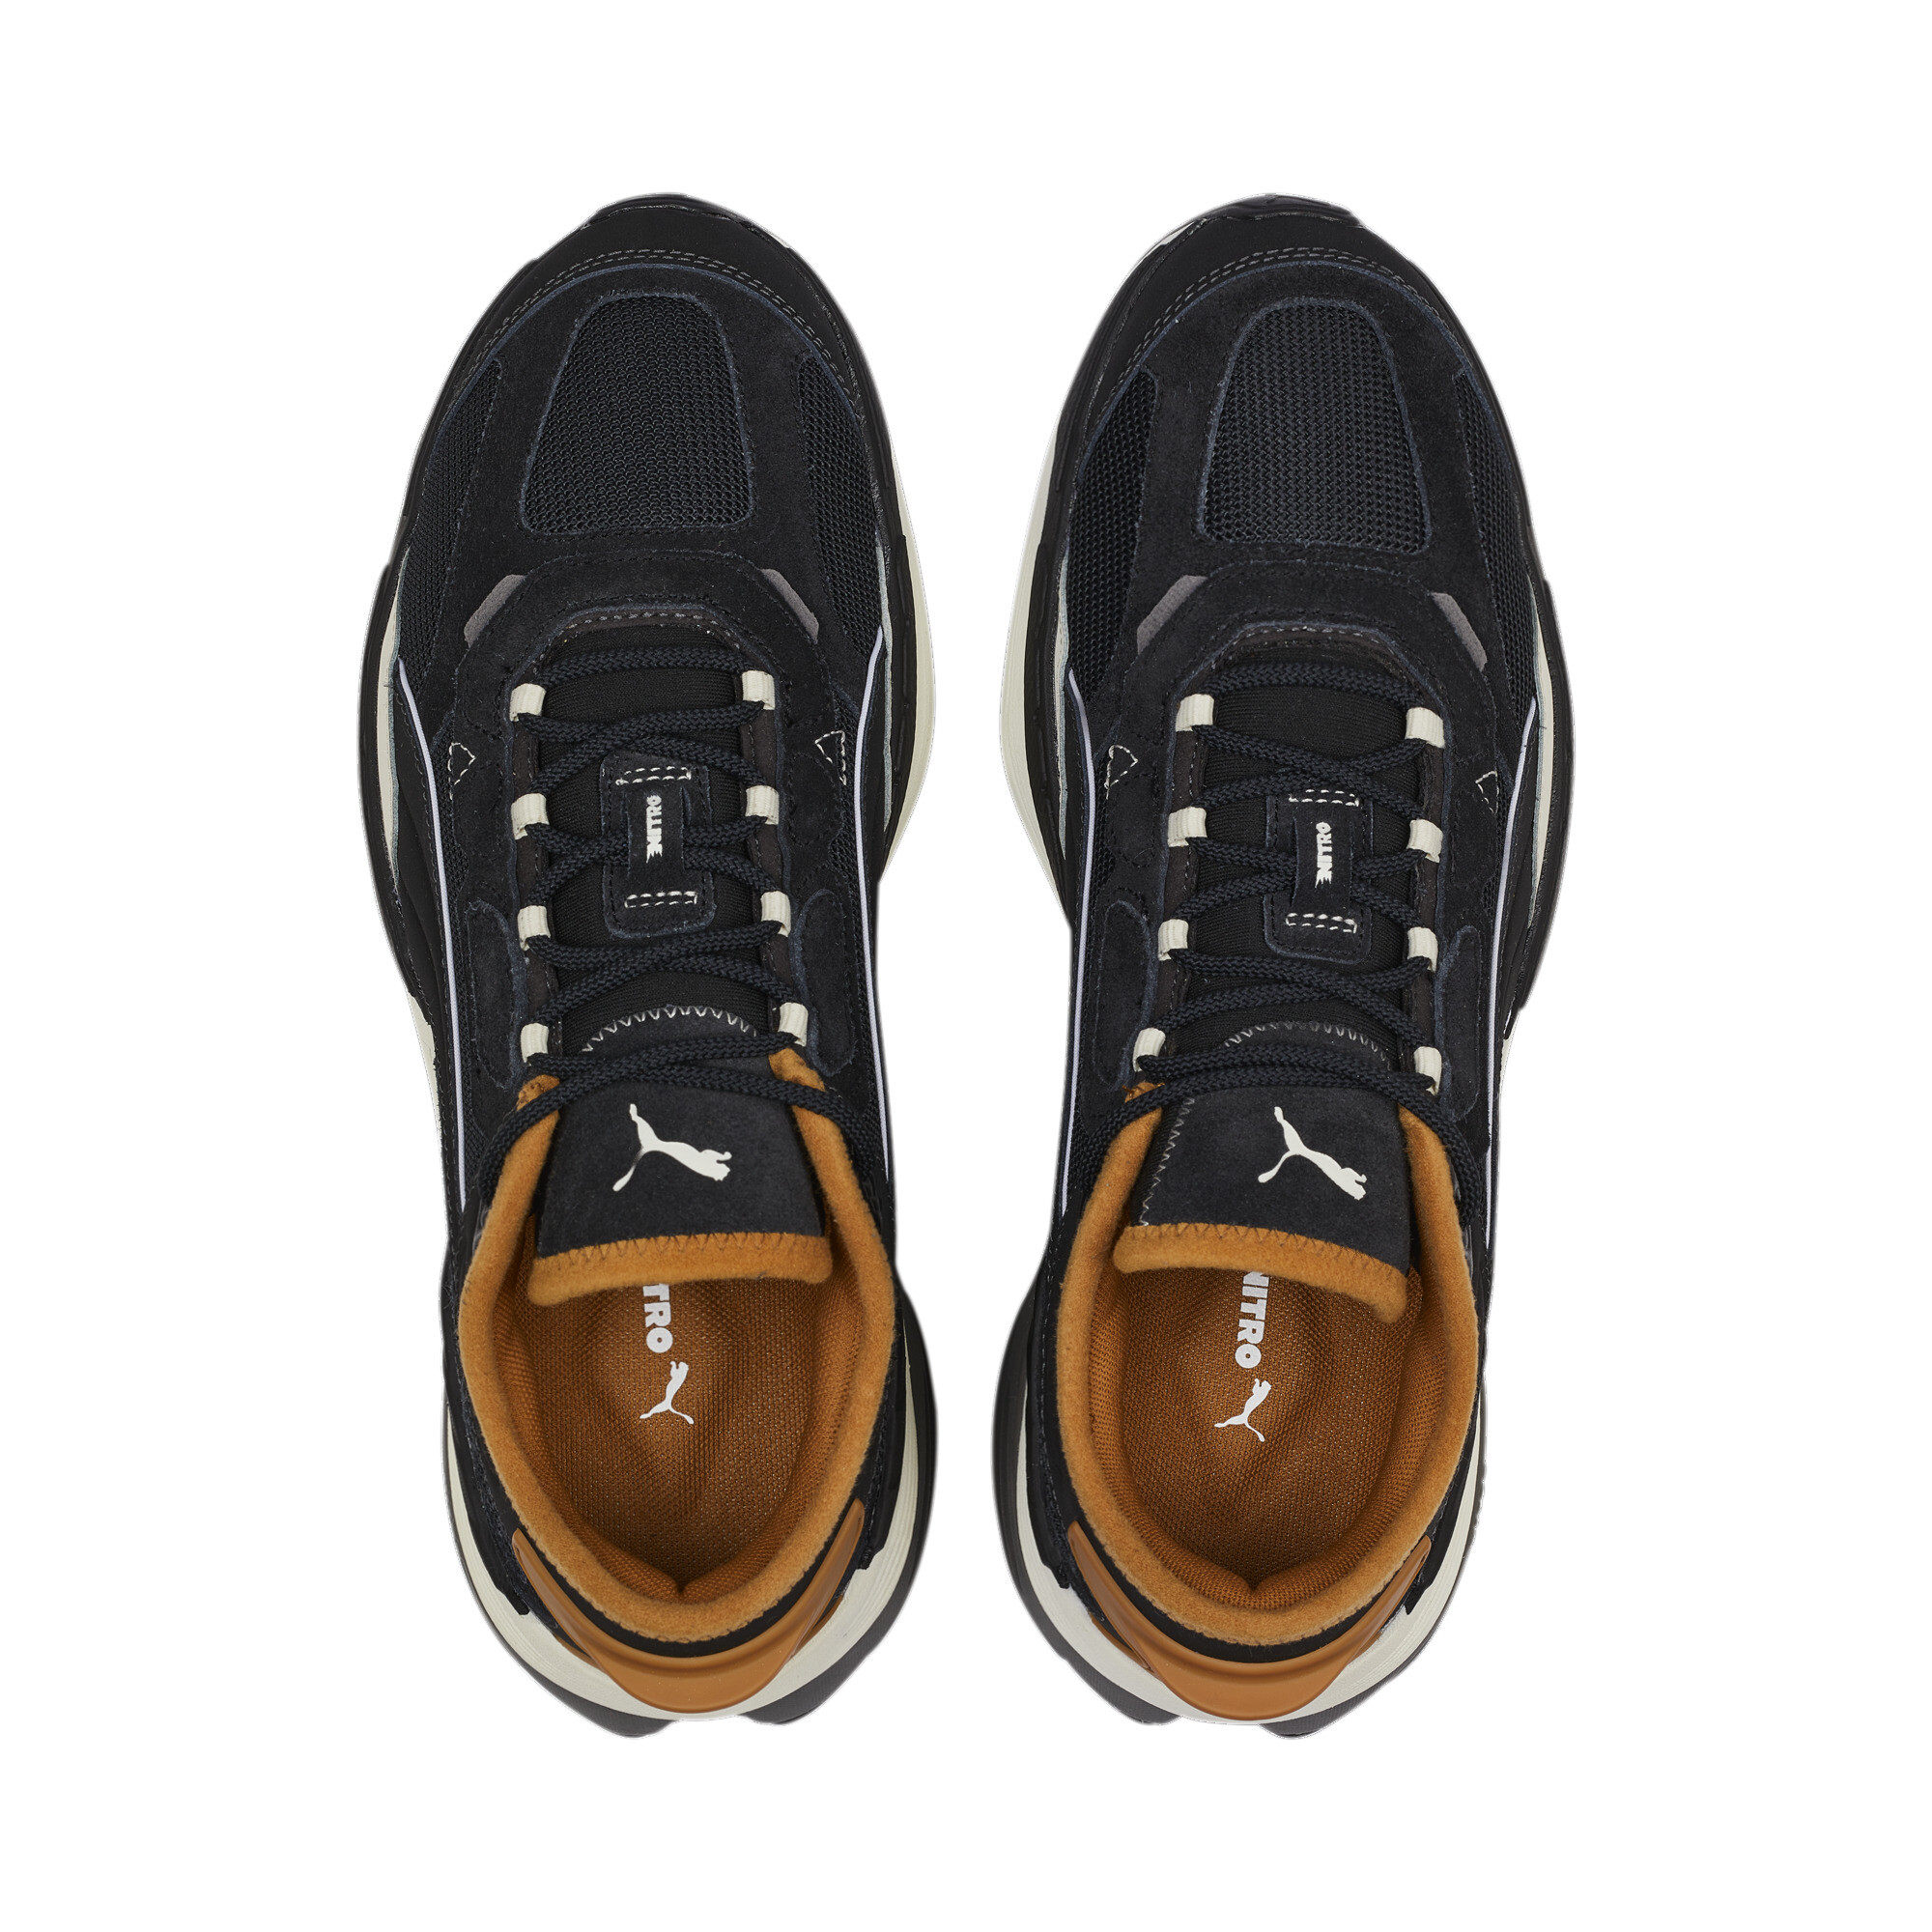 Men's PUMA Extent Nitro Heritage Sneakers In Black, Size EU 47